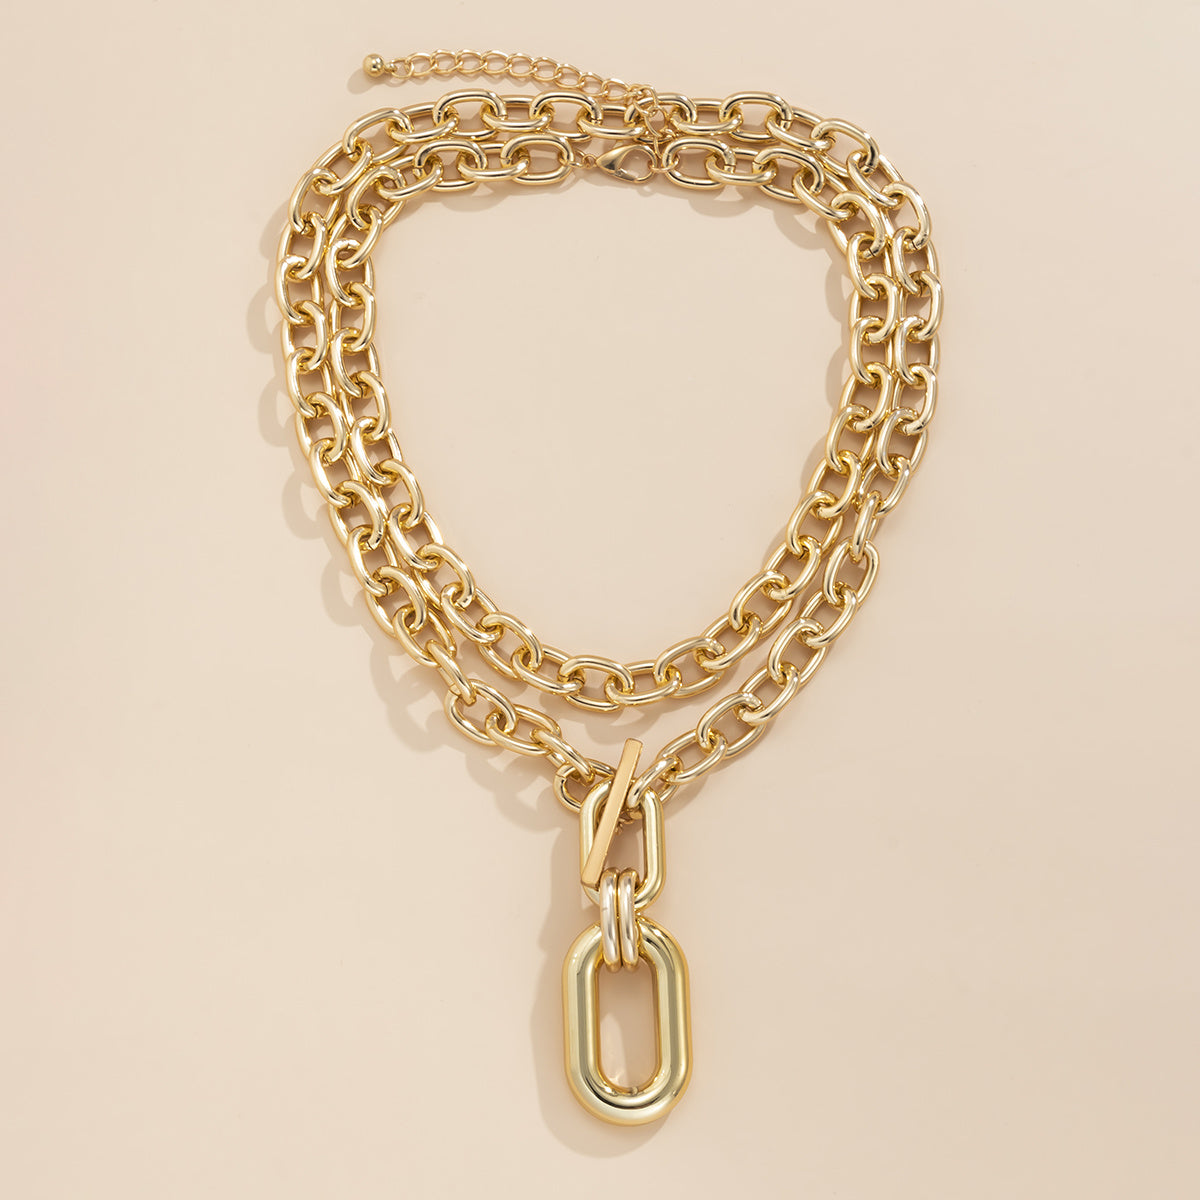 Gorgeous Geometric Designs: 2-Piece Ladies Chain Necklace Set for Fashionable Women